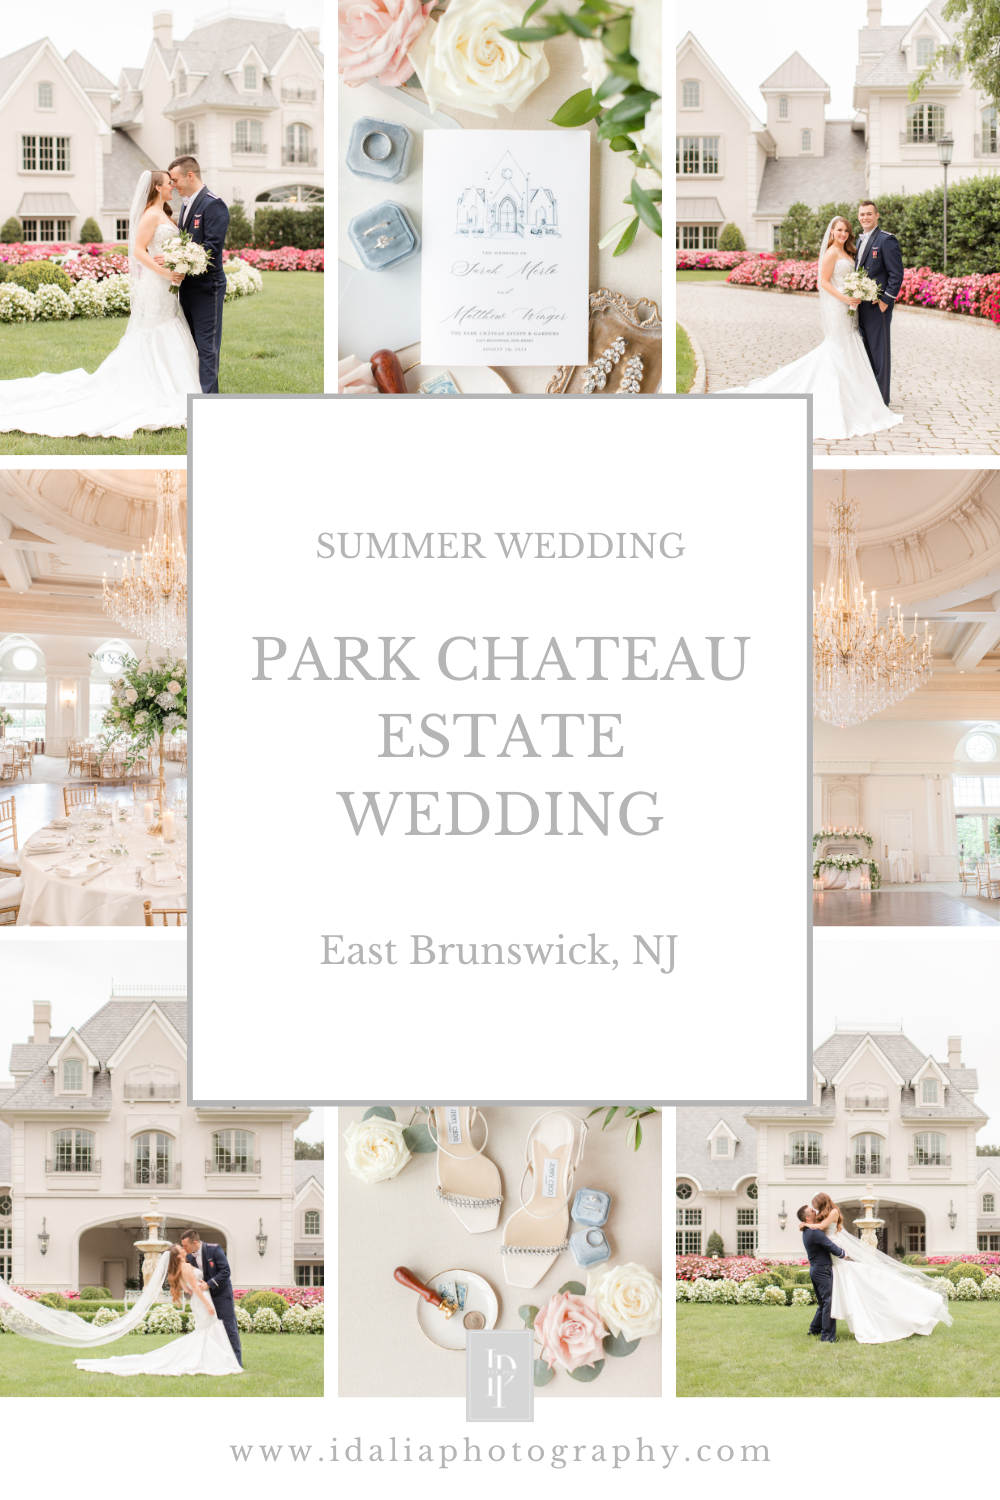 Park Chateau Estate wedding day photographed by Idalia Photography